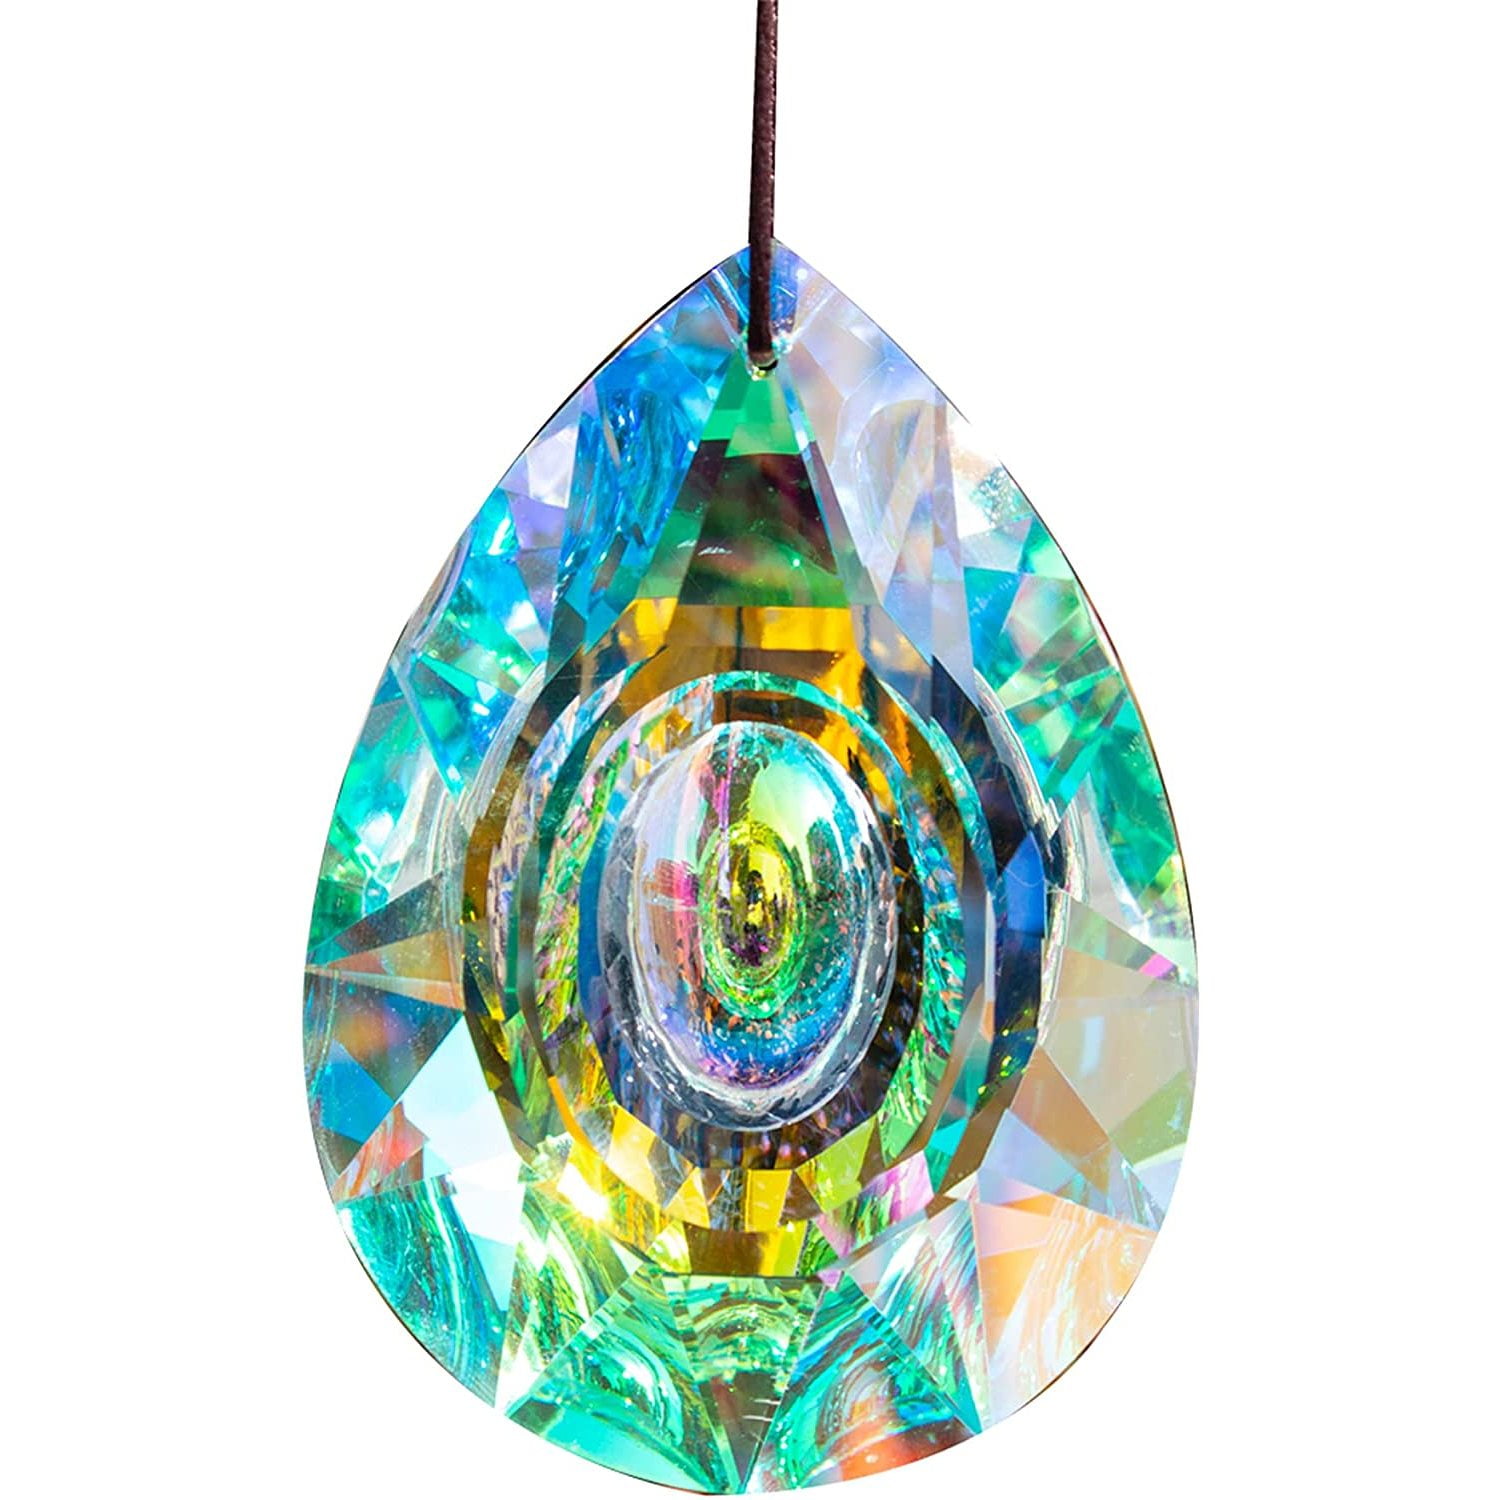 76mm Rainbow Crystal Suncatcher Chandelier Lamp Hanging Pendant Home Decor 